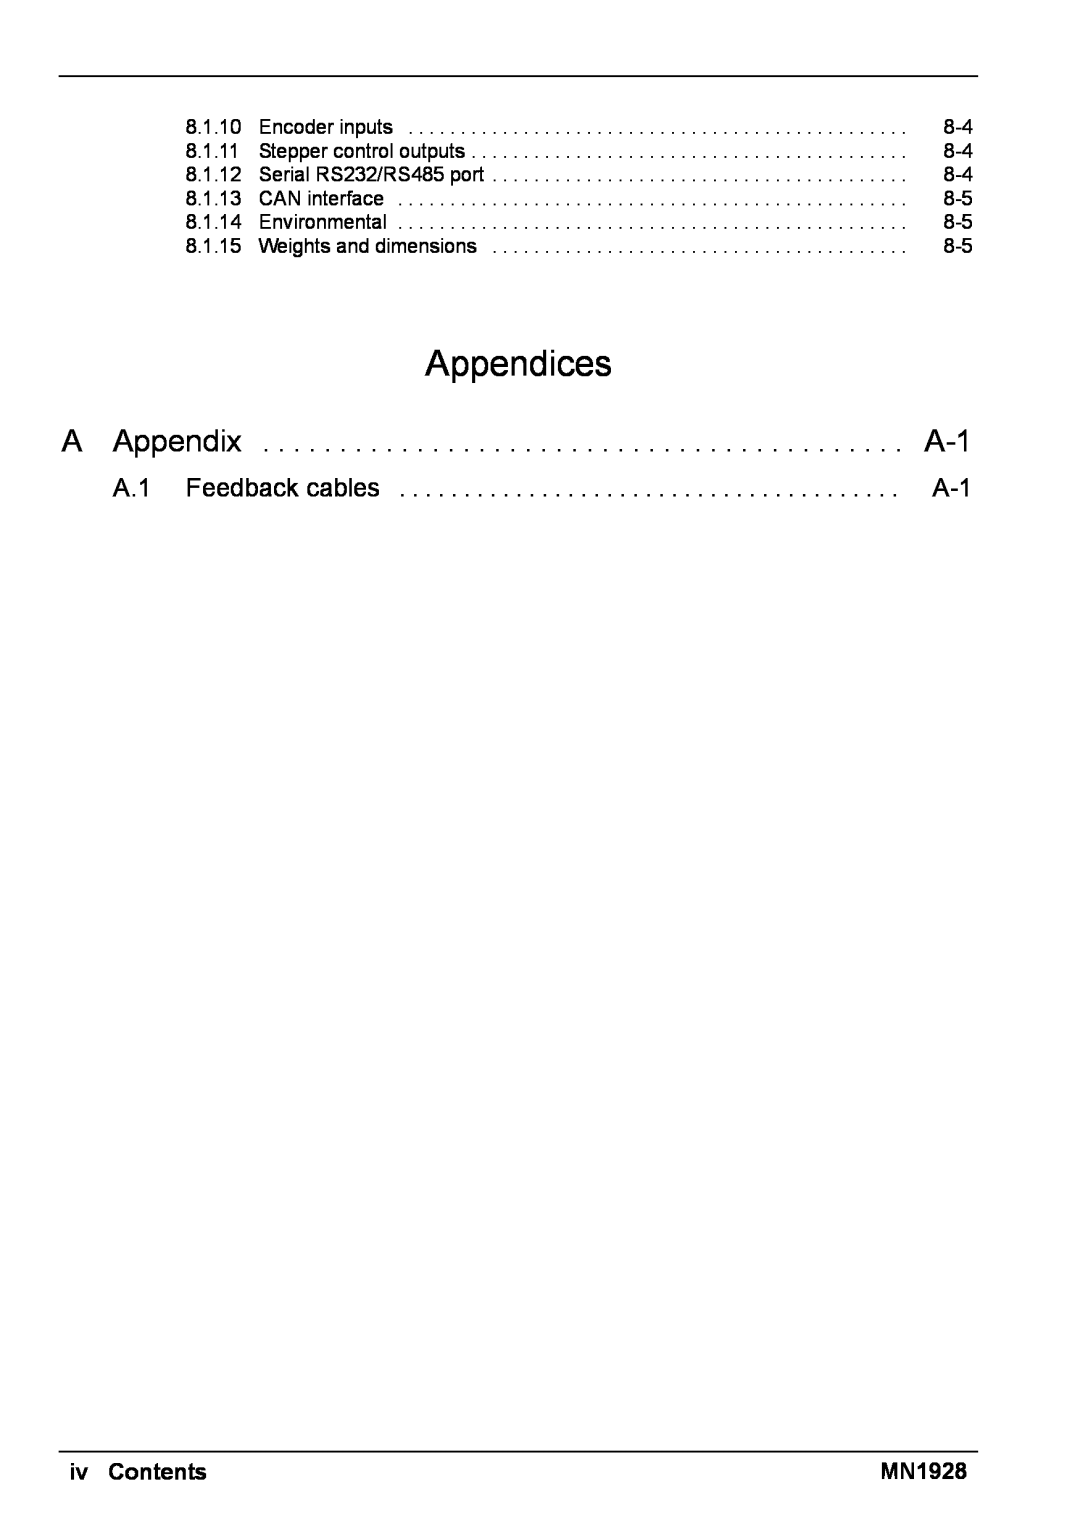 Baldor MN1928 installation manual A Appendix, Appendices, iv Contents 